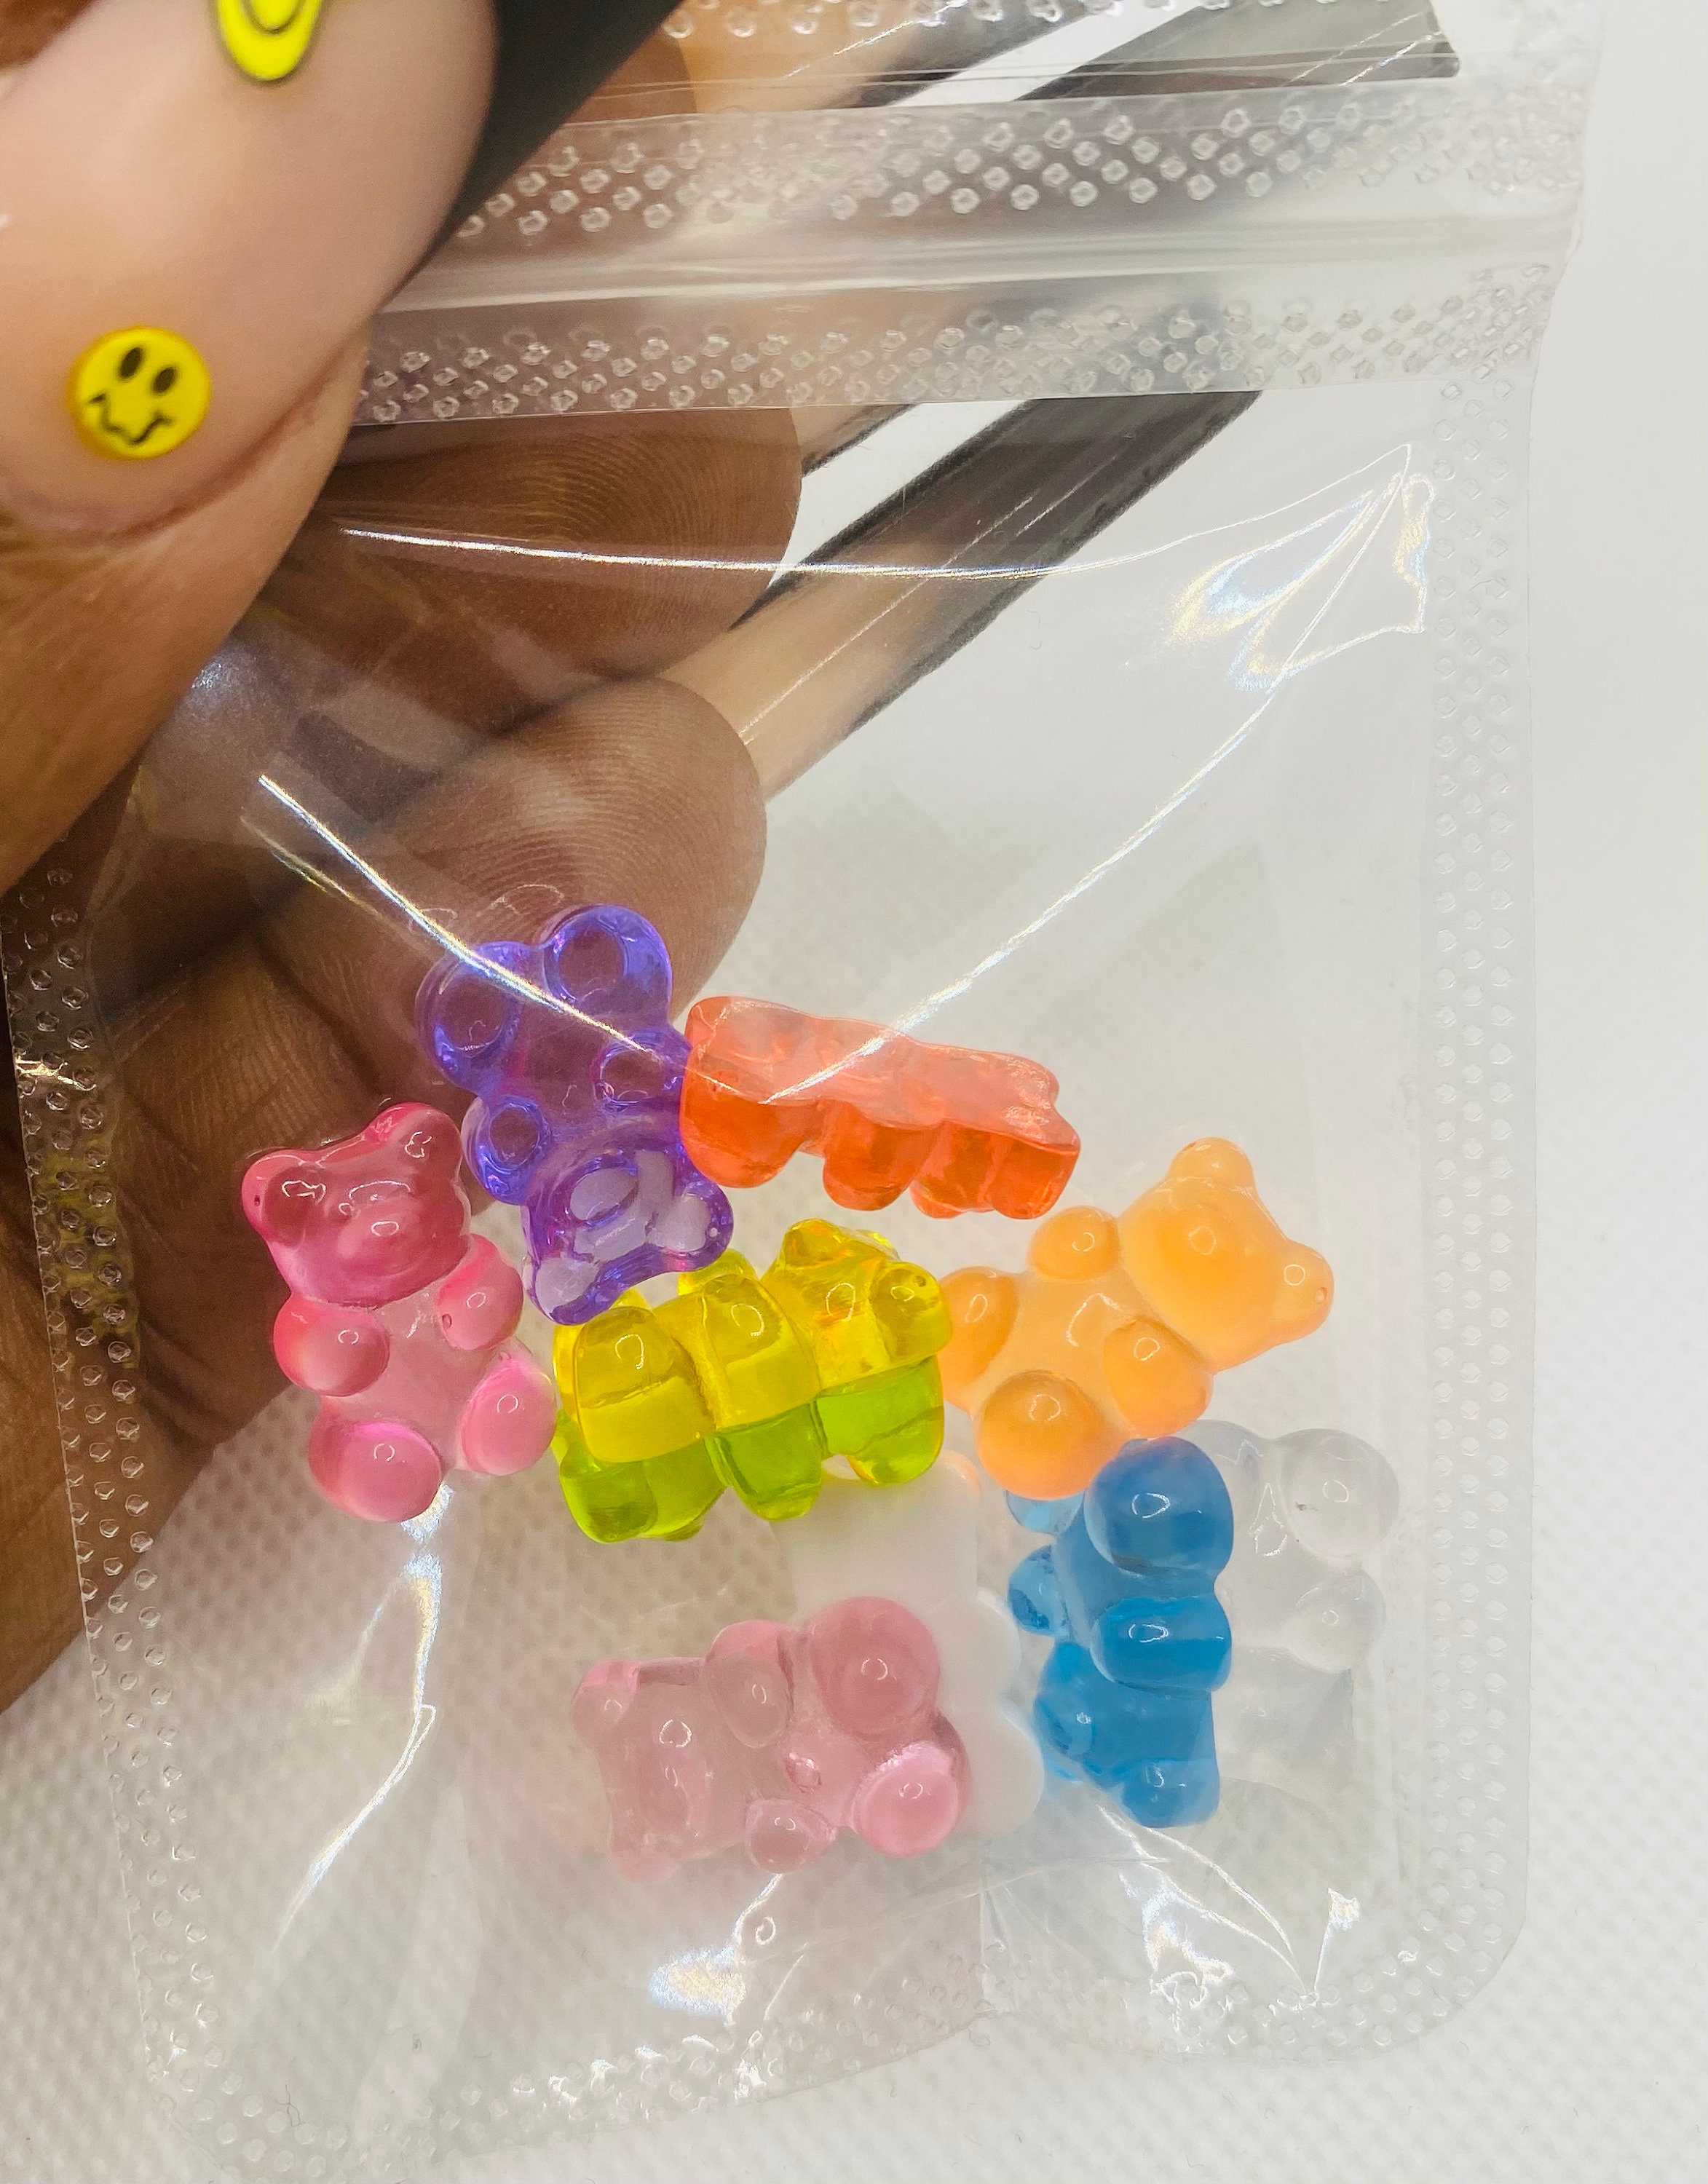 20pcs/lot Big 3d Bear Nail Charms, Kawaii Neon Candy Gummy Acrylic